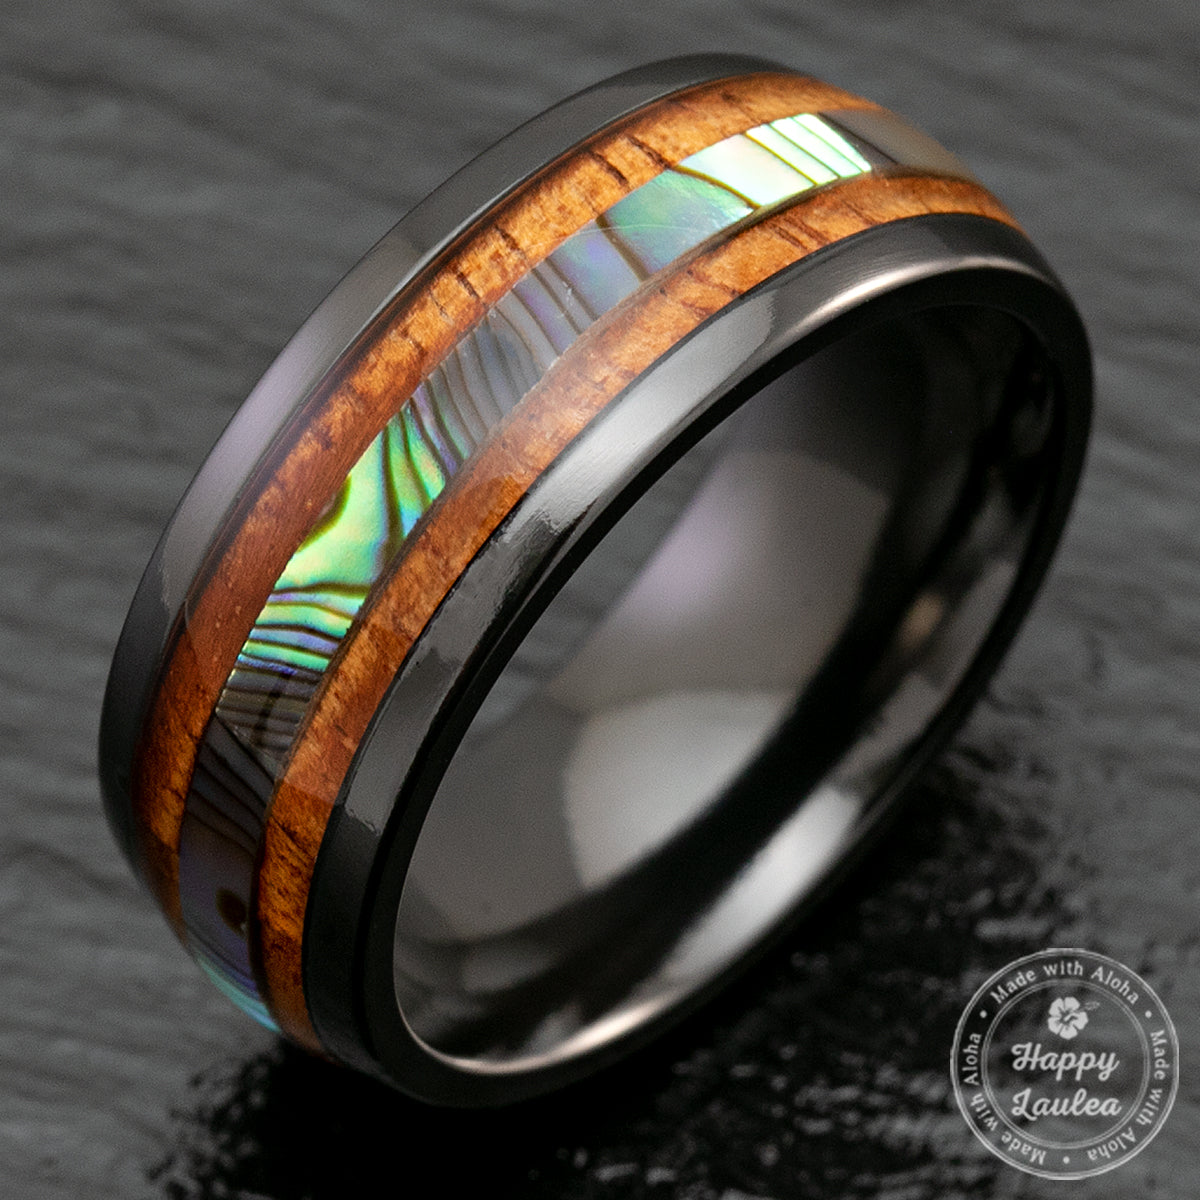 Black Zirconium 8mm Ring with Abalone Shell & Hawaii Koa Wood Inlay - Dome Shape, Comfort Fitment